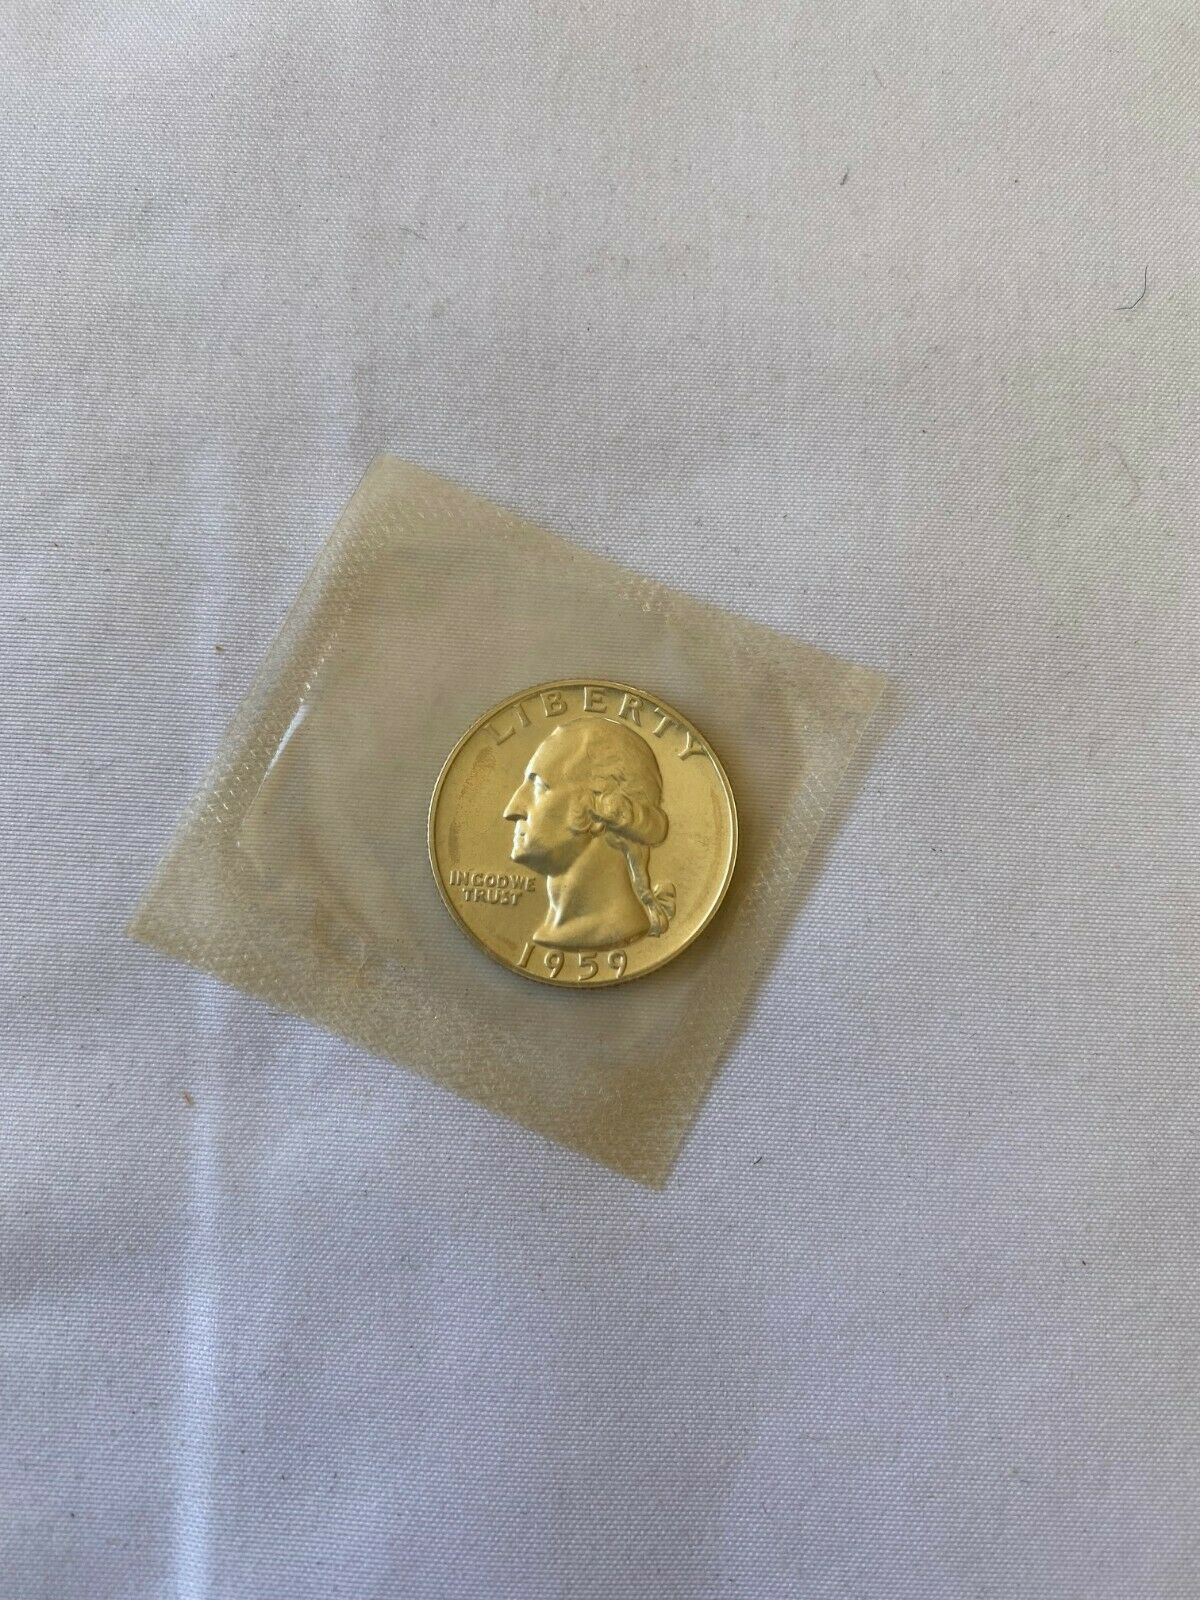 1959 Washington Quarter 25c Silver Proof UNC Coin Sealed in Original Mint Cello